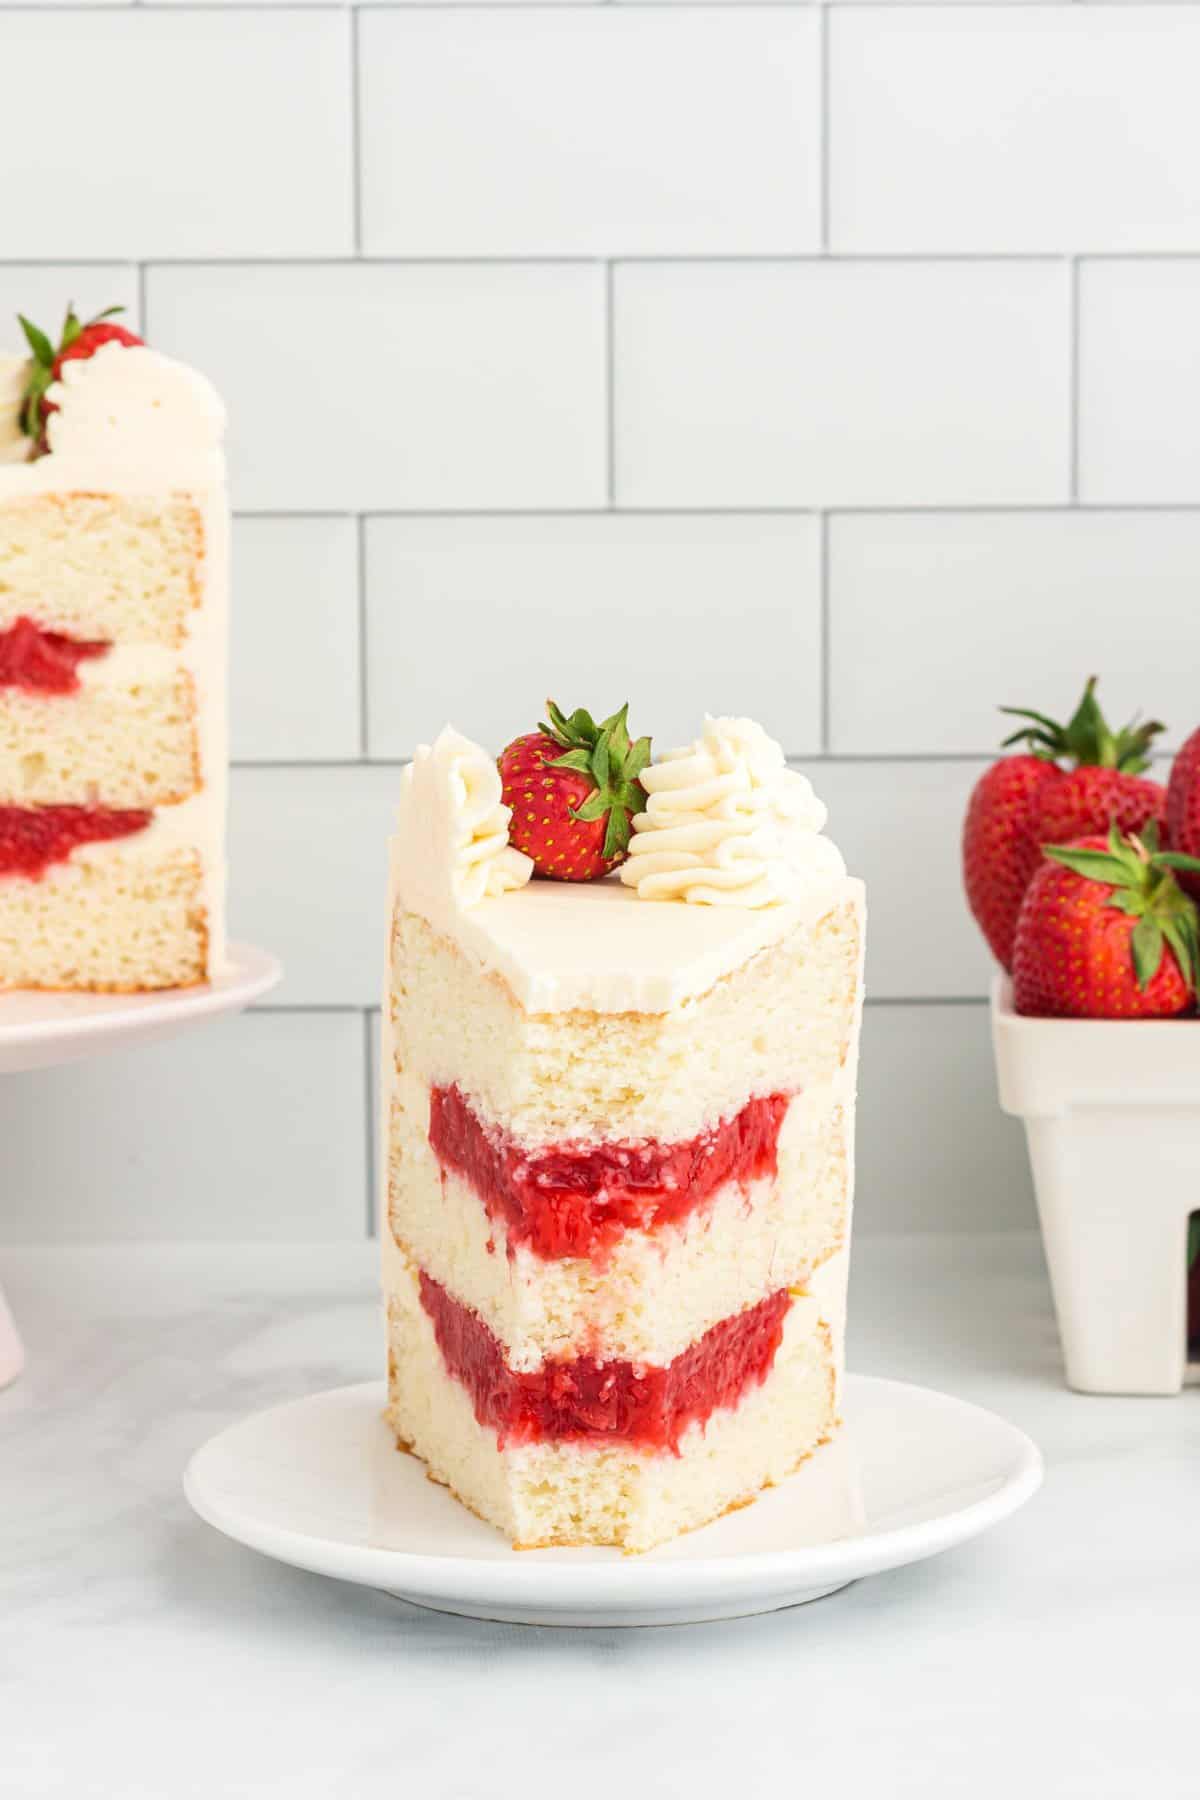 ism strawberry cake filling recipe 16 scaled